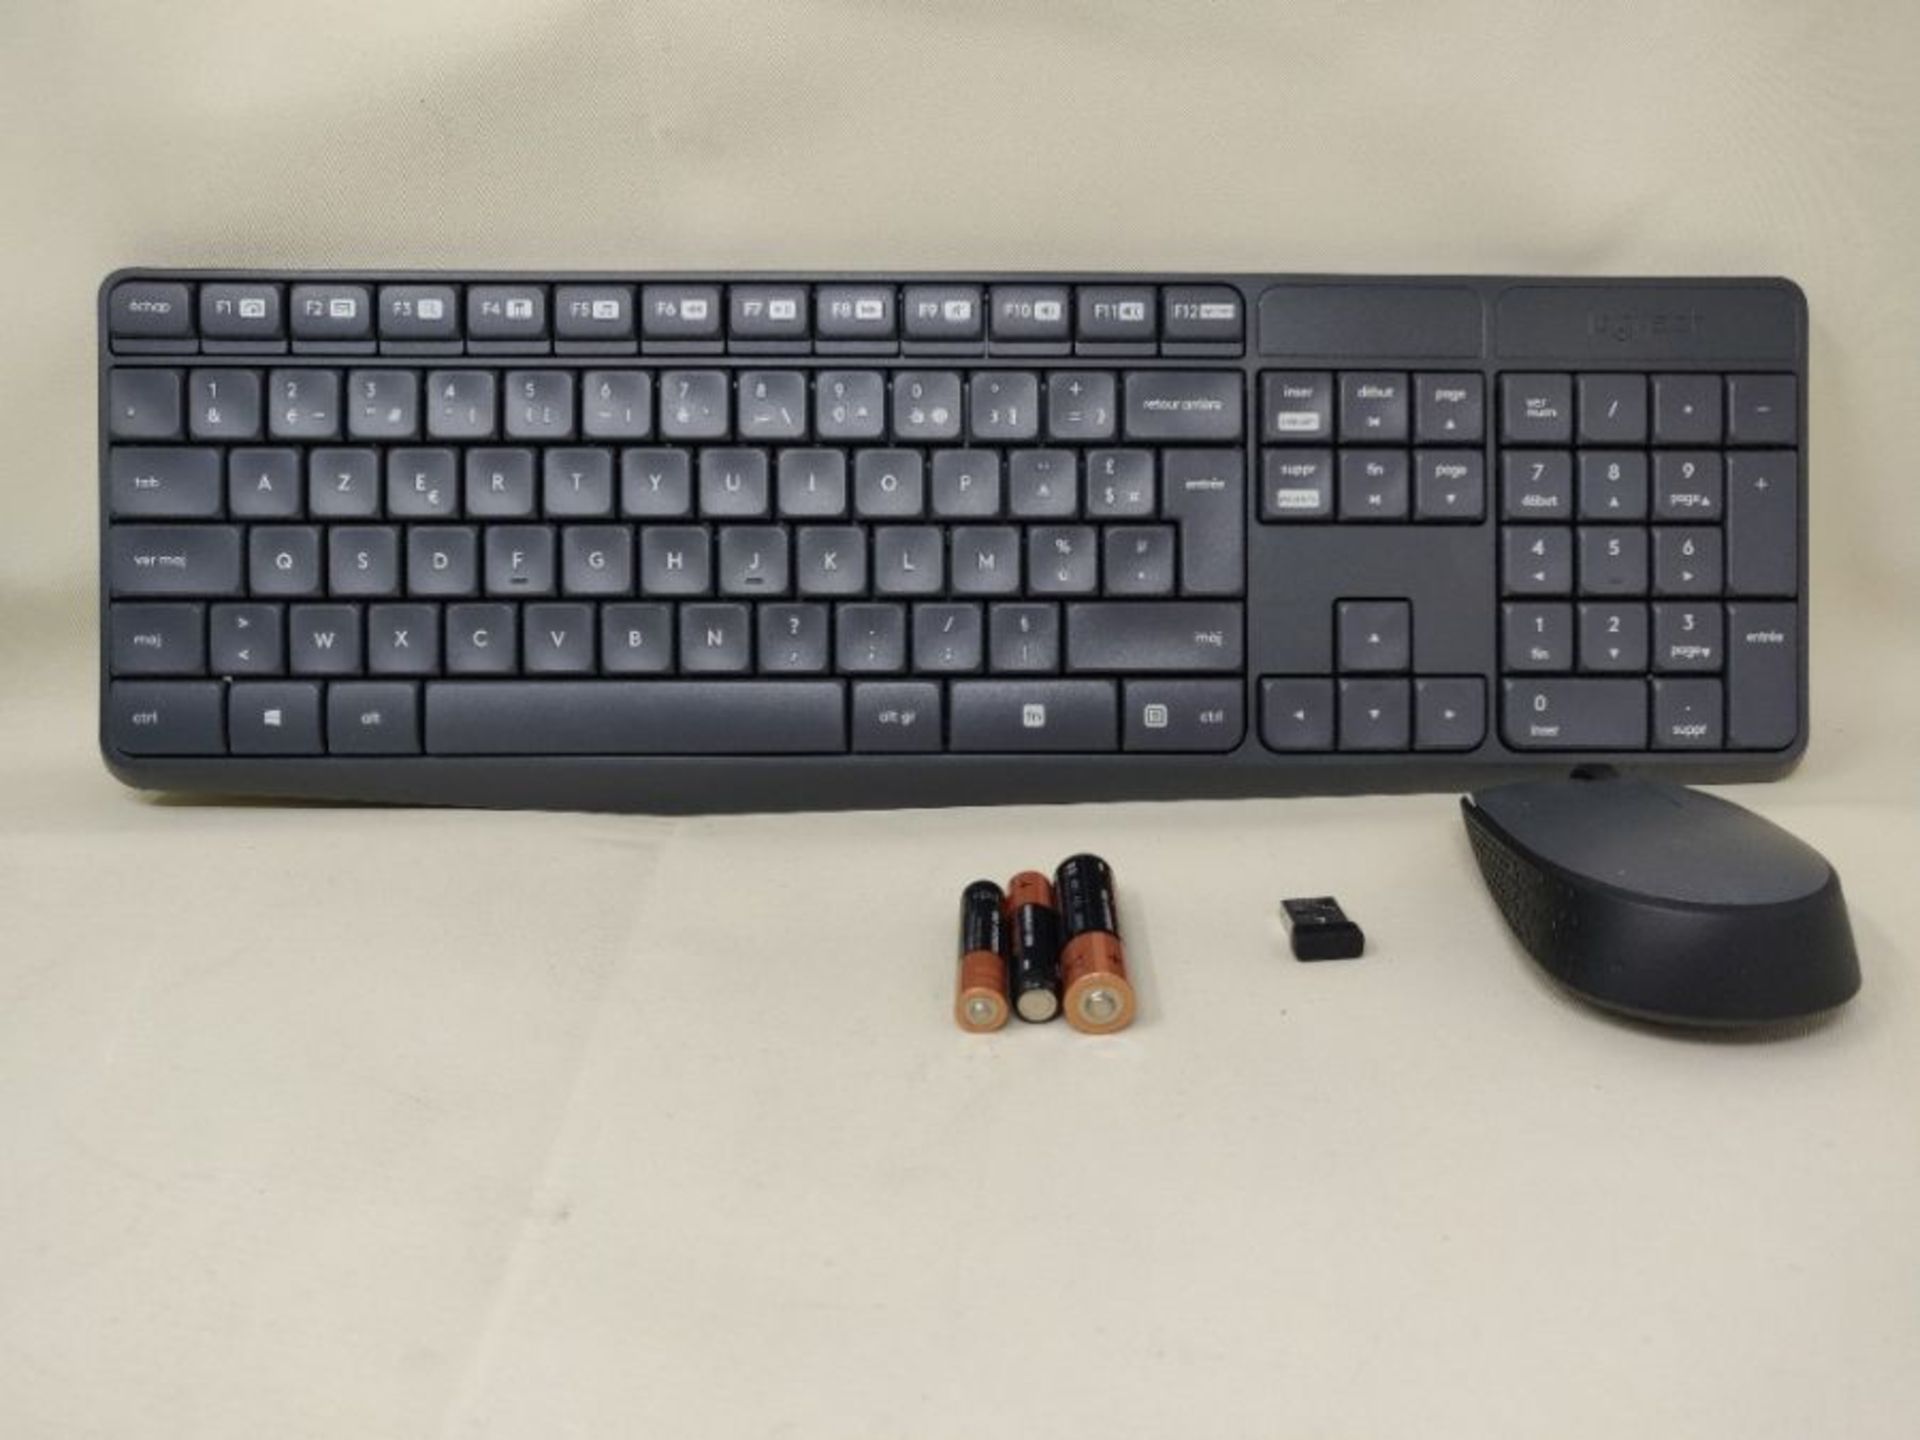 Logitech MK235 Wireless Keyboard and Mouse Combo, AZERTY French Layout - Black - Image 3 of 6